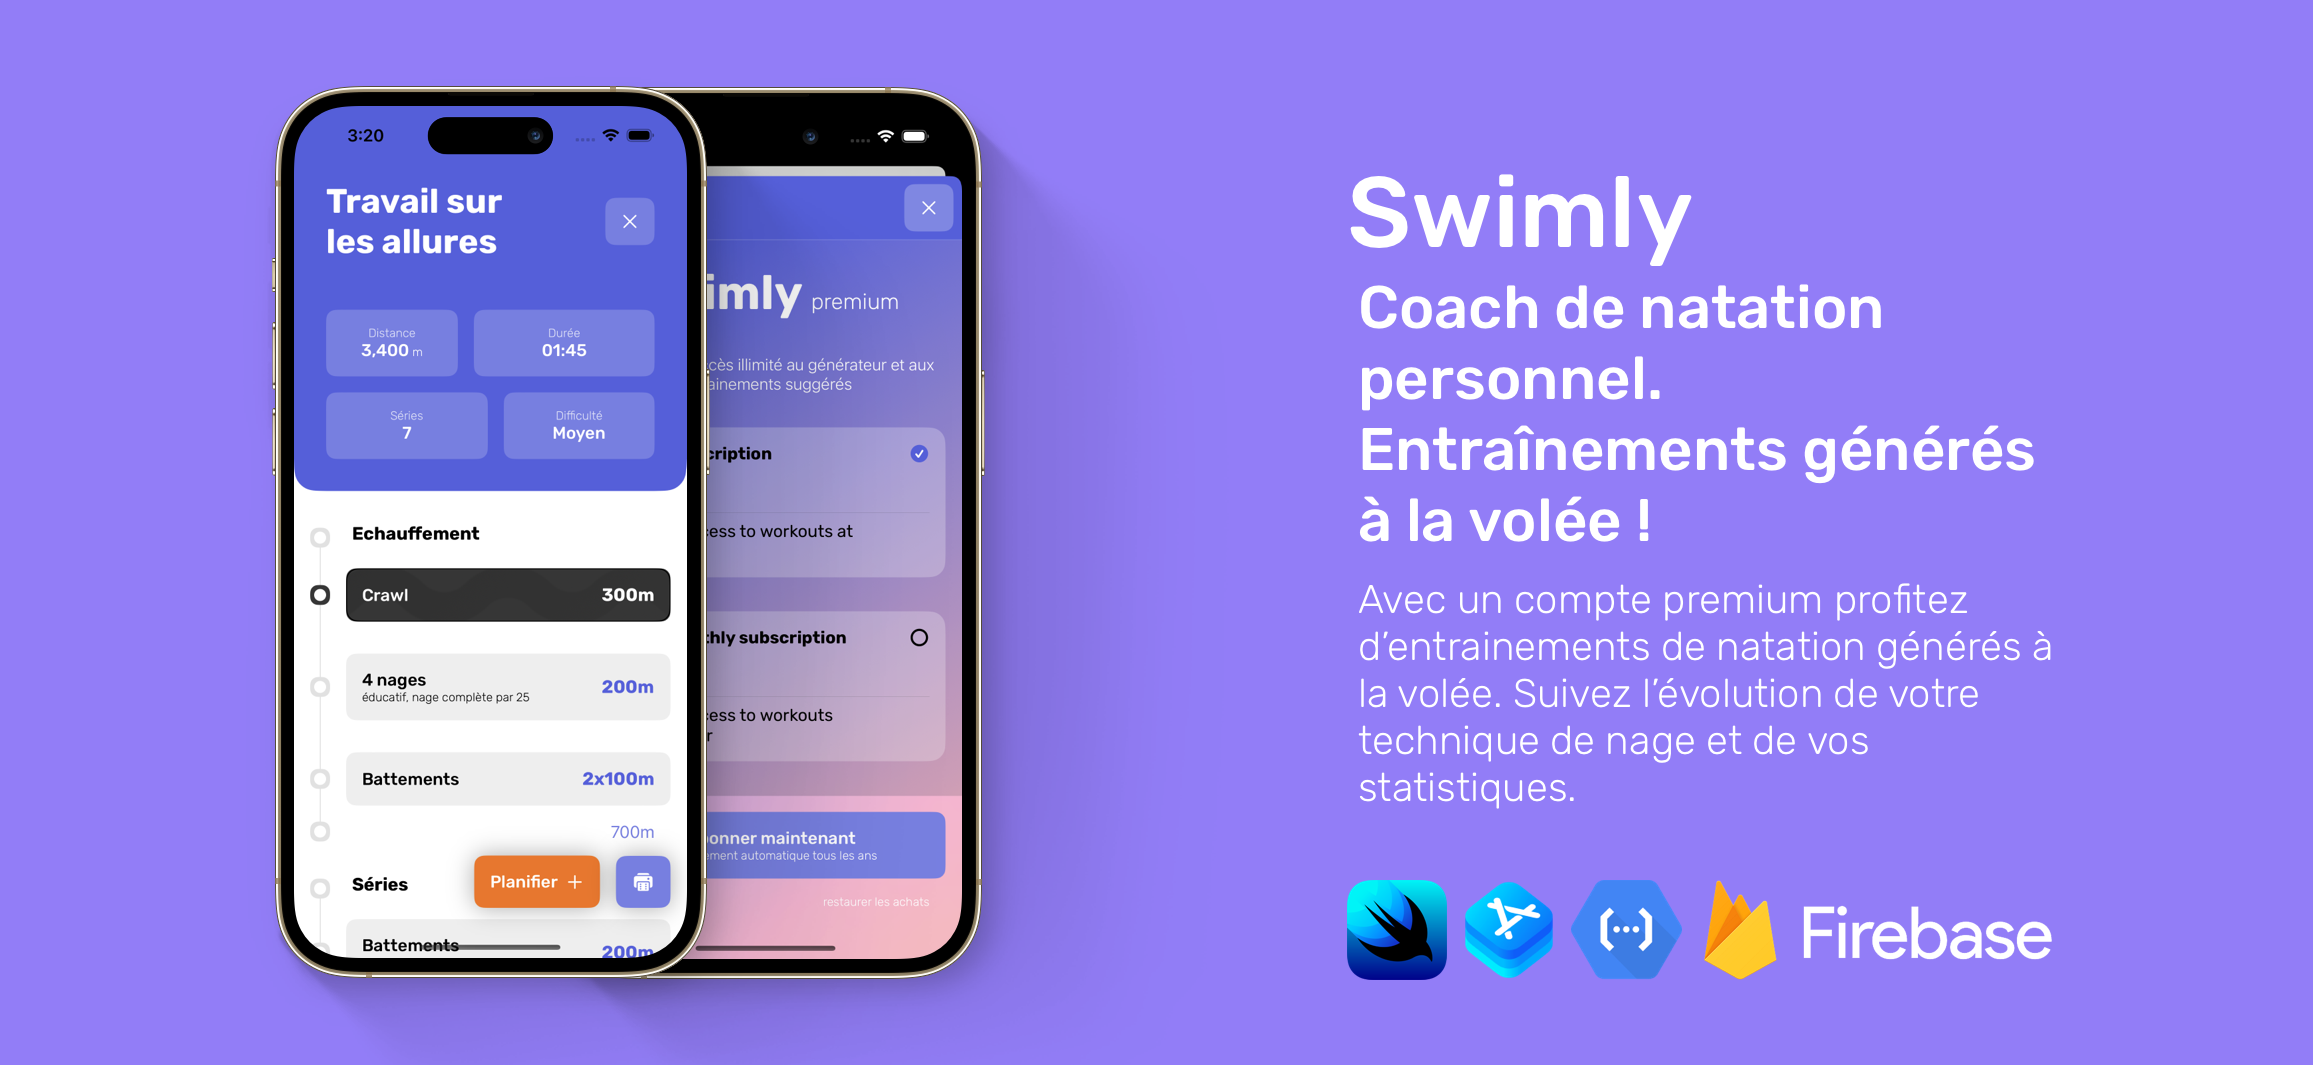 swimly app showcase